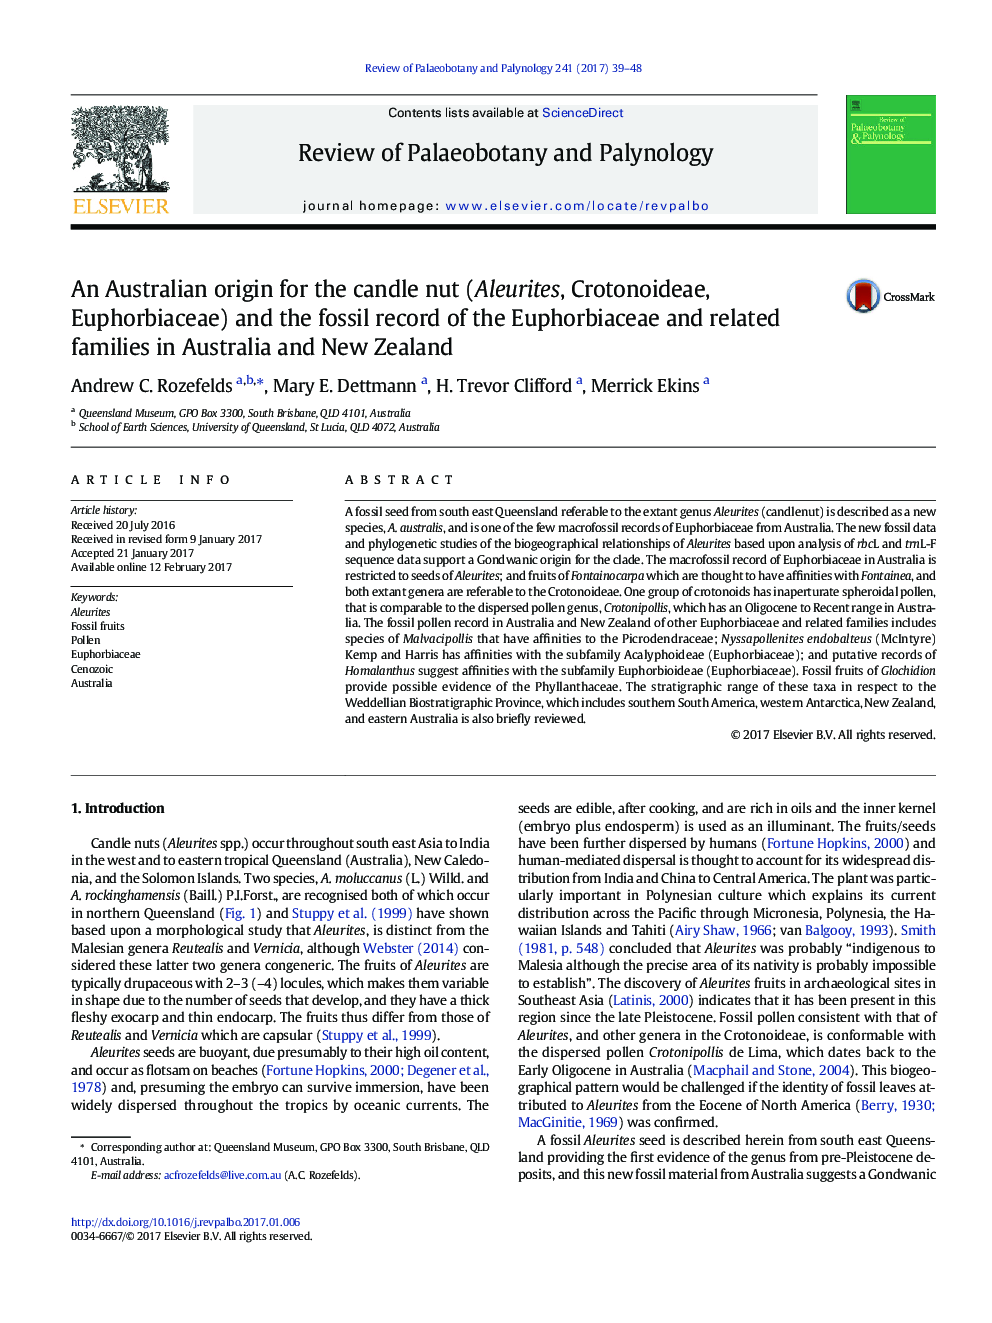 An Australian origin for the candle nut (Aleurites, Crotonoideae, Euphorbiaceae) and the fossil record of the Euphorbiaceae and related families in Australia and New Zealand